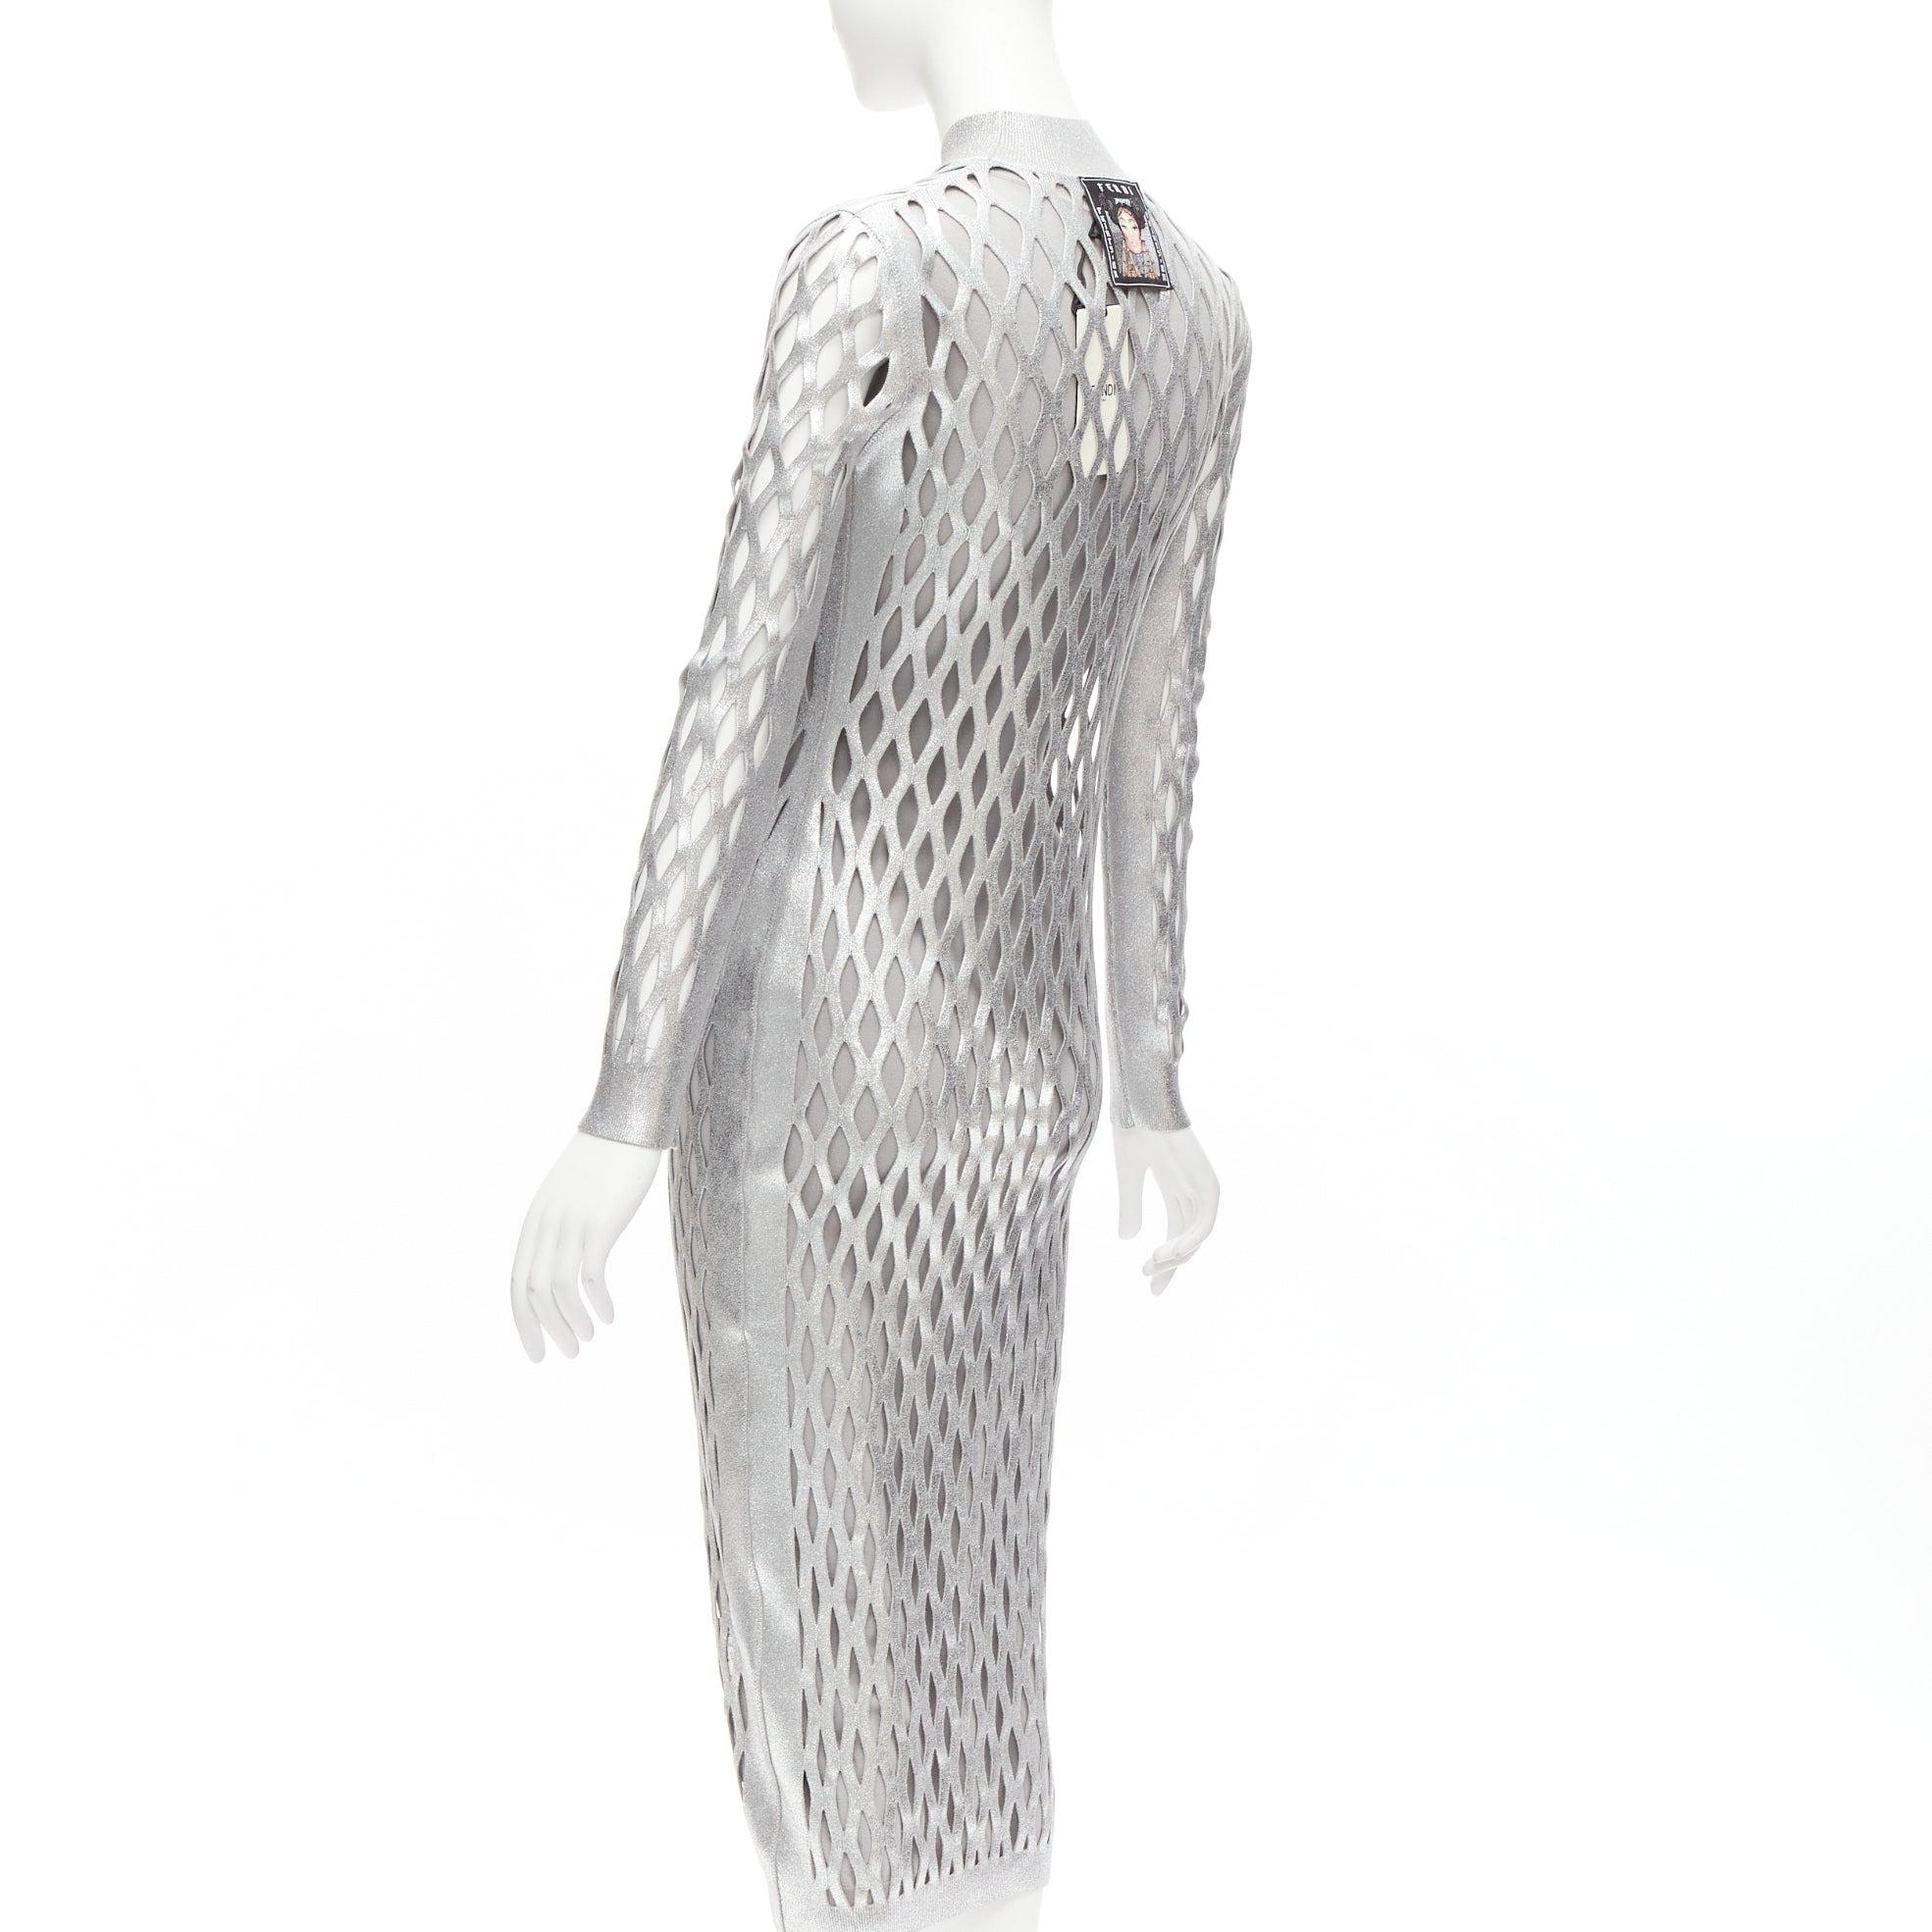 new FENDI Nicki Minaj 2019 Runway Abito silver net cut out lined dress IT42 M For Sale 1